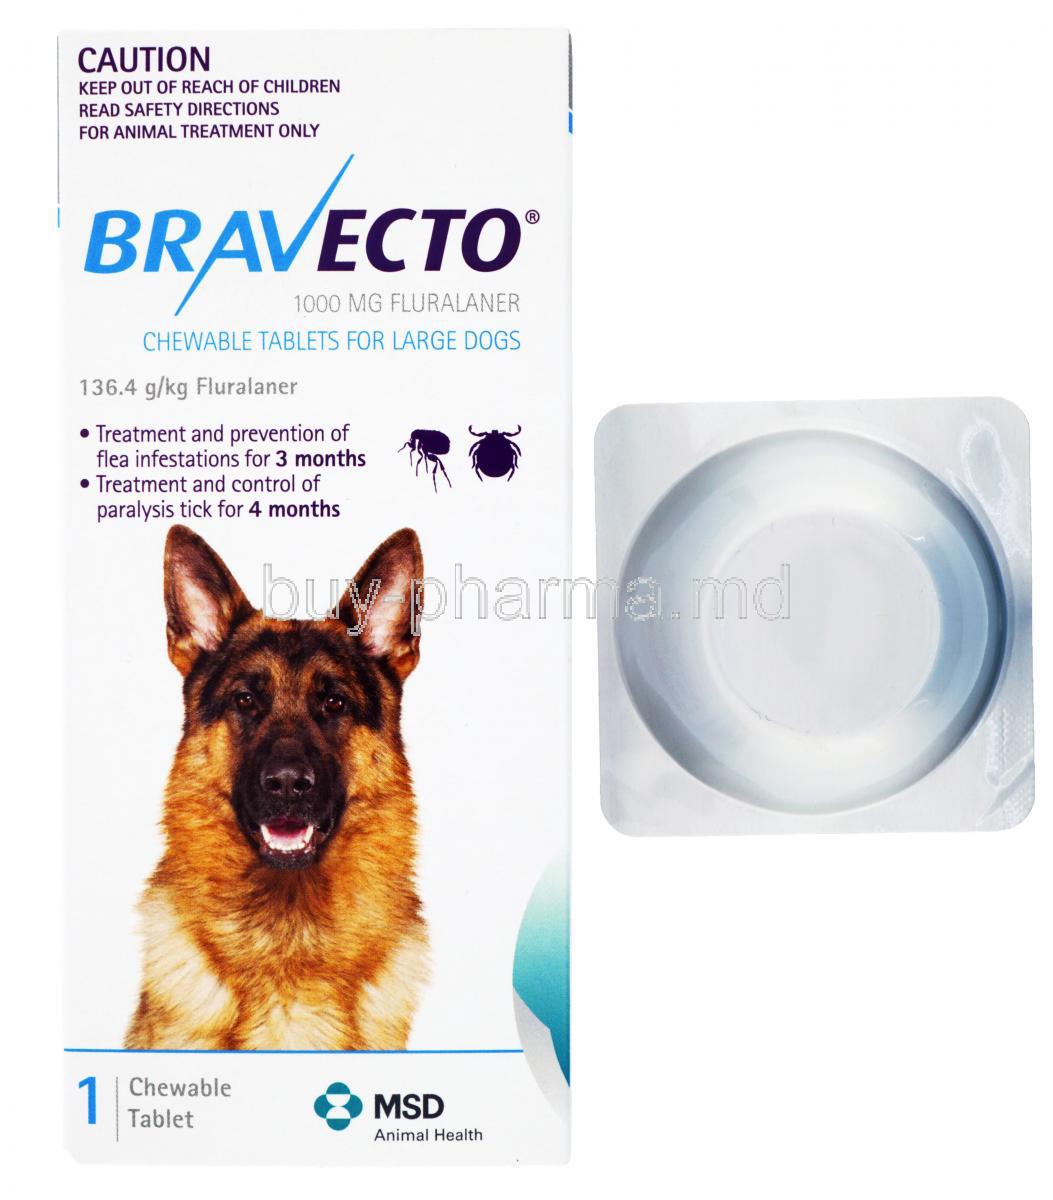 Bravecto,Fluralaner, 1000mg 136.4 g/kg Fluralaner, Chewable tablets for large dogs, 1 chewable tablet, box and blister pack front presentation, MSD animal health